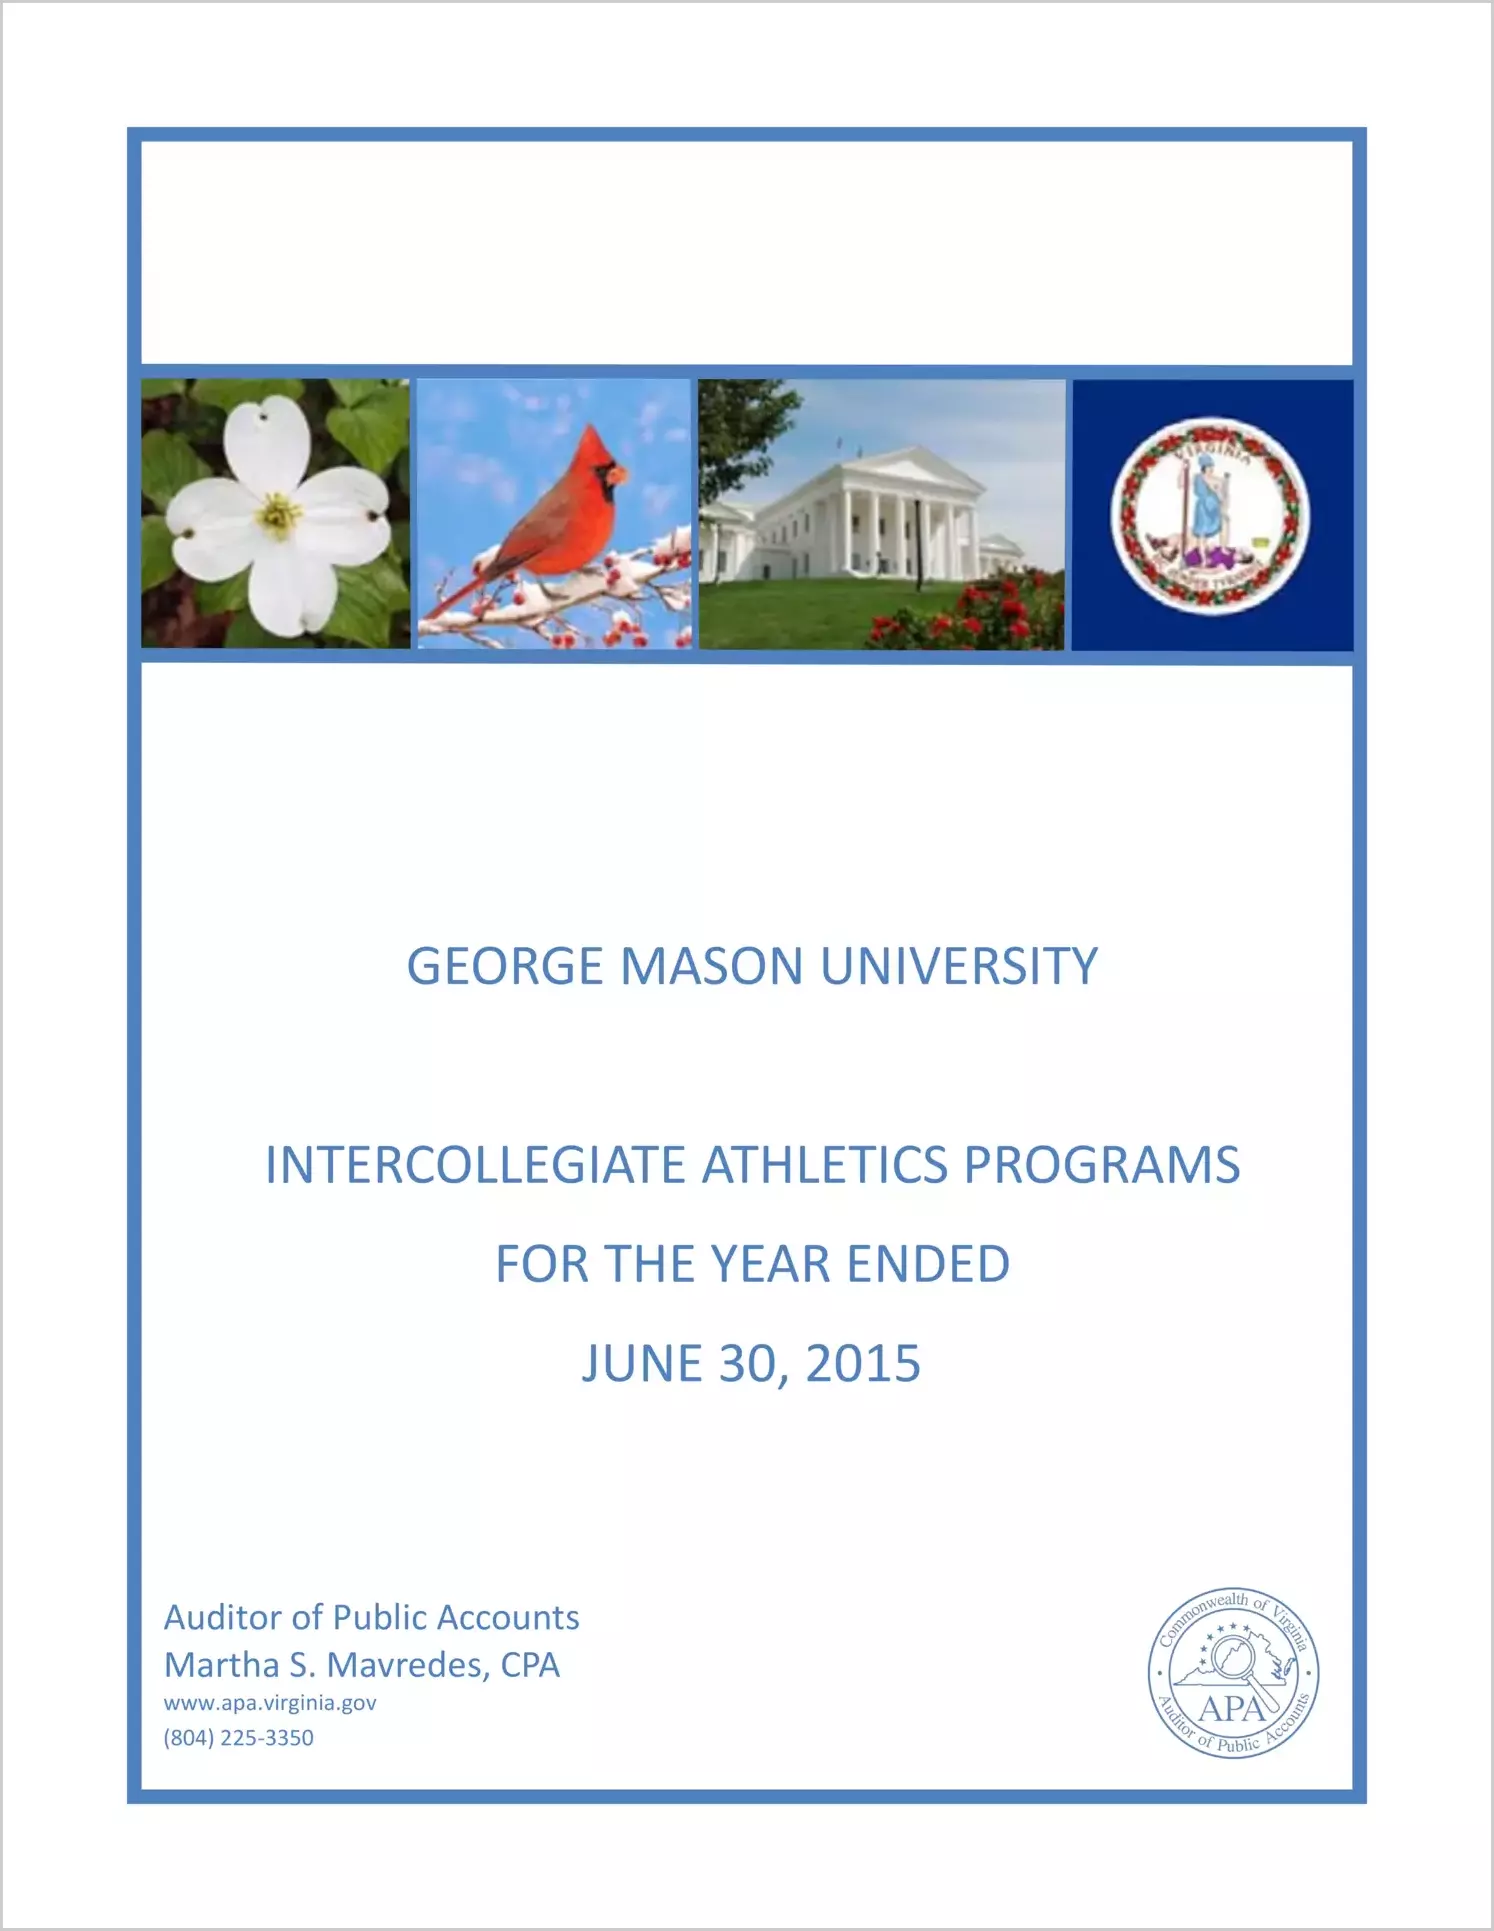 George Mason University Intercollegiate Athletics Programs for the year ended June 30, 2015